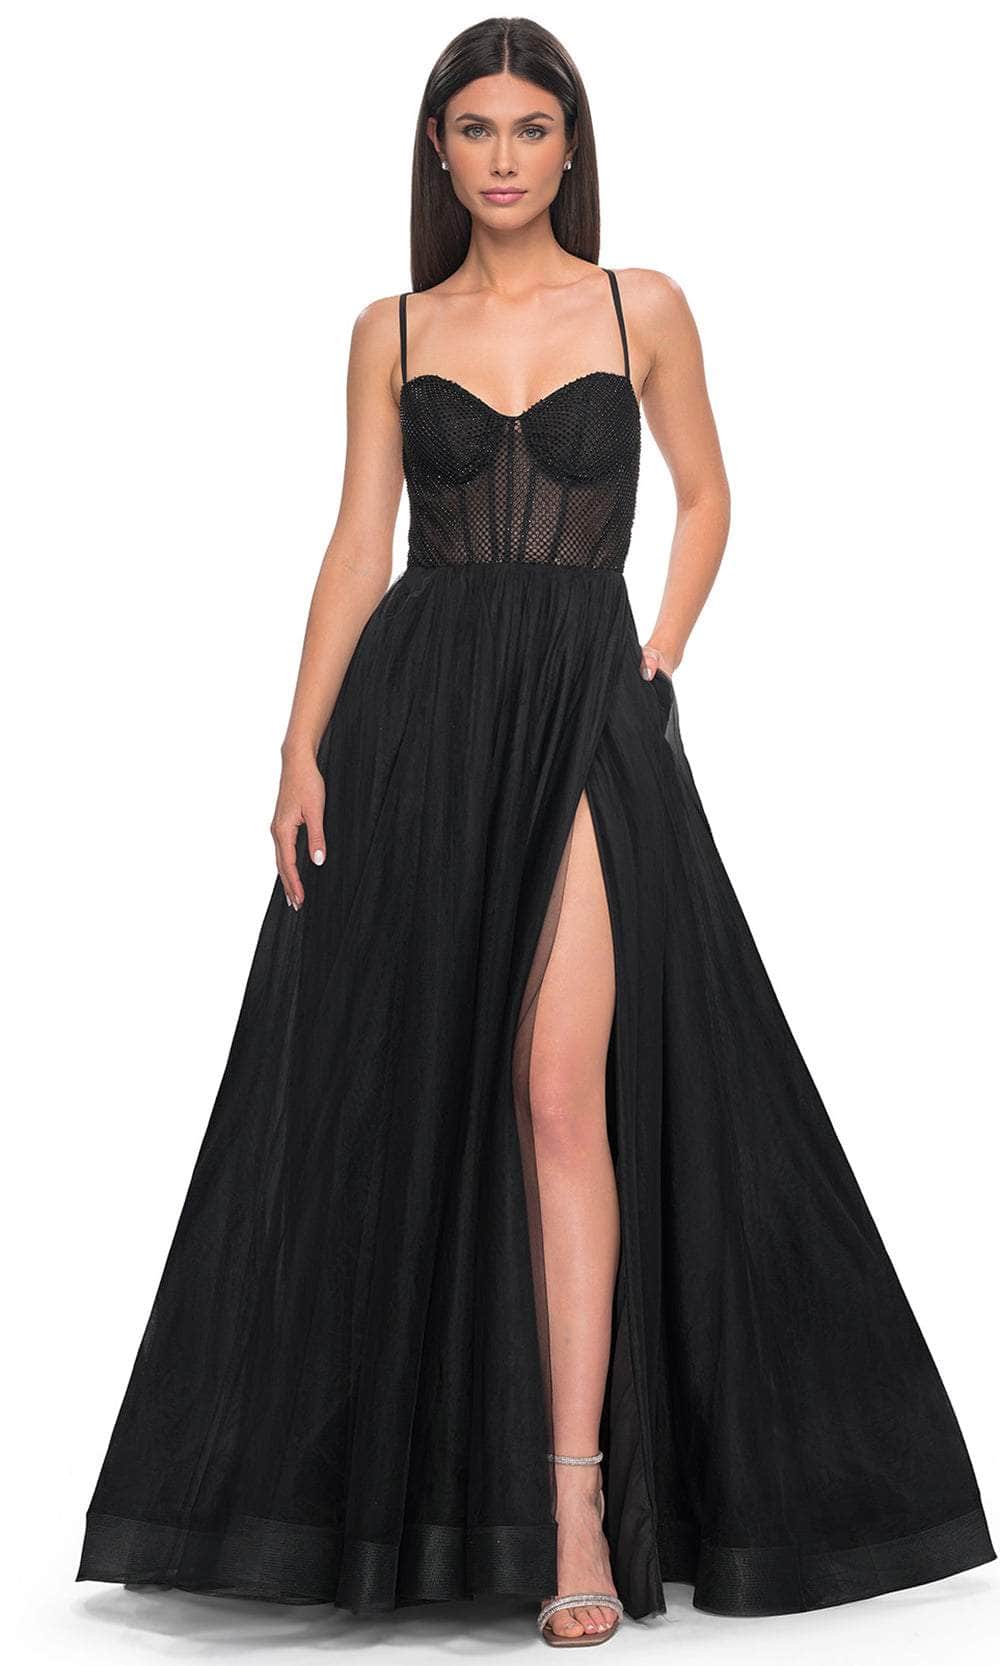 Image of La Femme 32135 - Fishnet Bodice Prom Dress